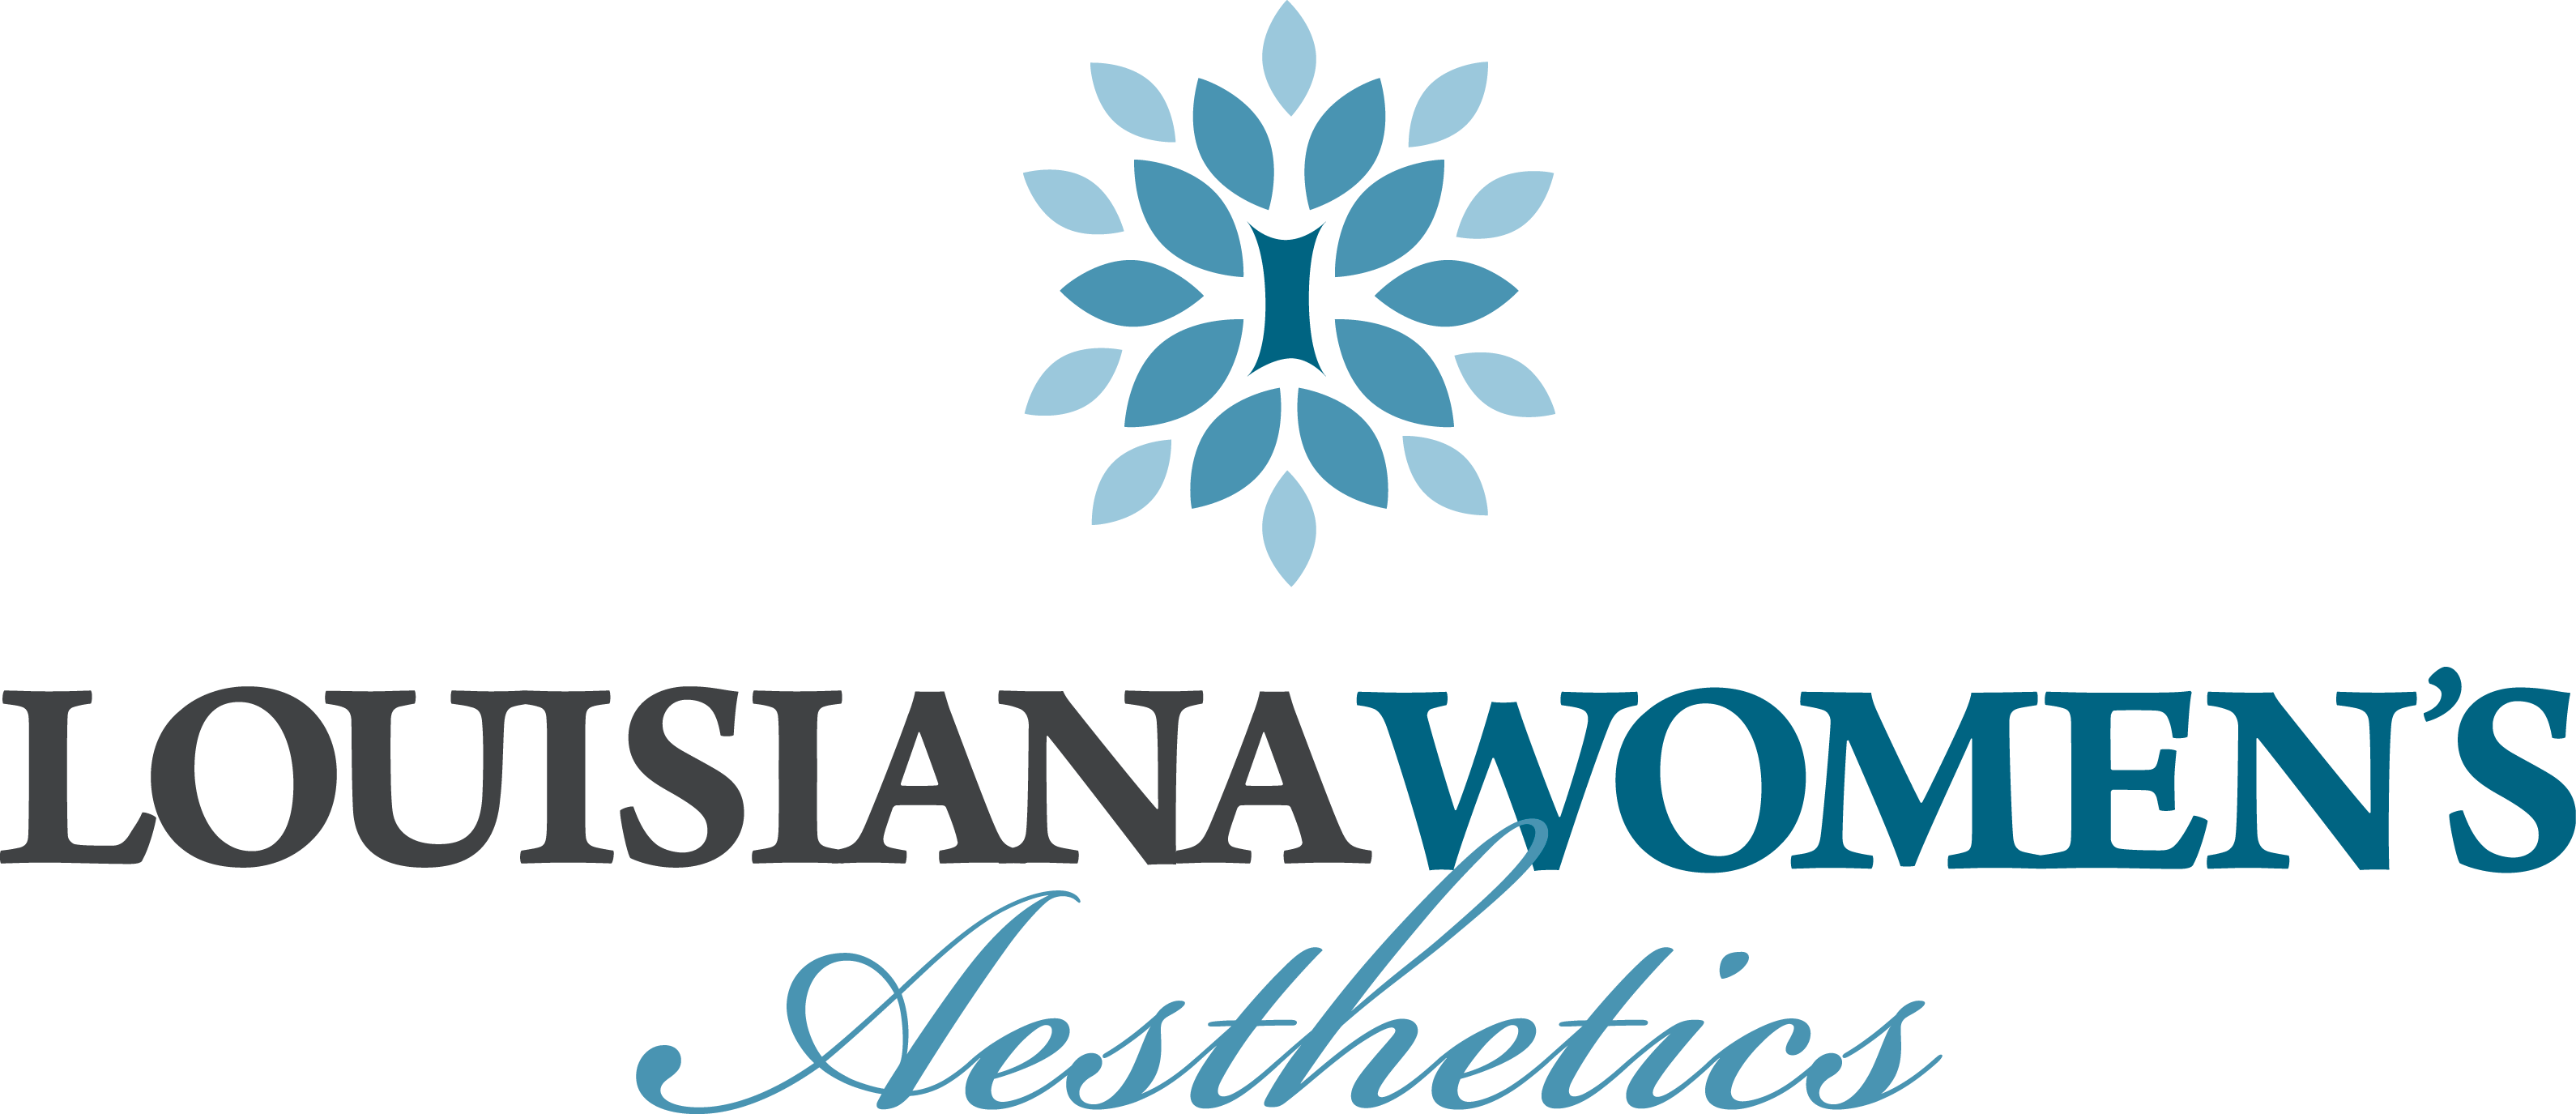 Official logo of Louisiana Women's Aesthetics